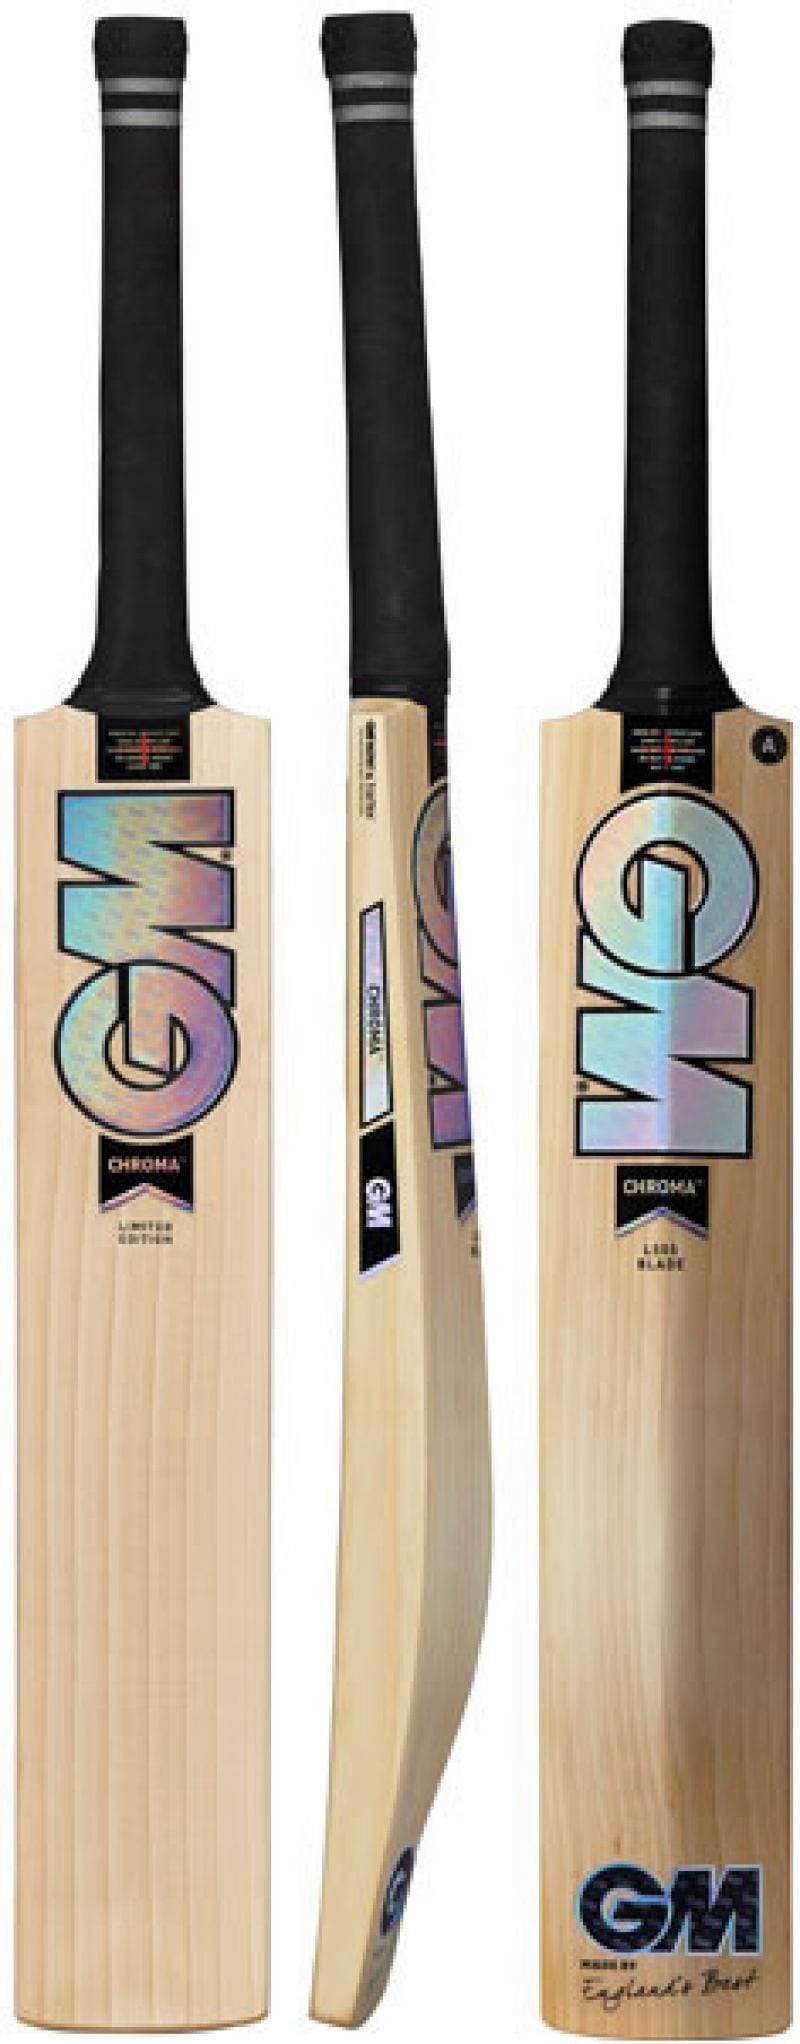 Gunn & Moore Cricket Bats 6 / 2'3 GM Chroma Dxm 808 Ttnow Junior Cricket Bat